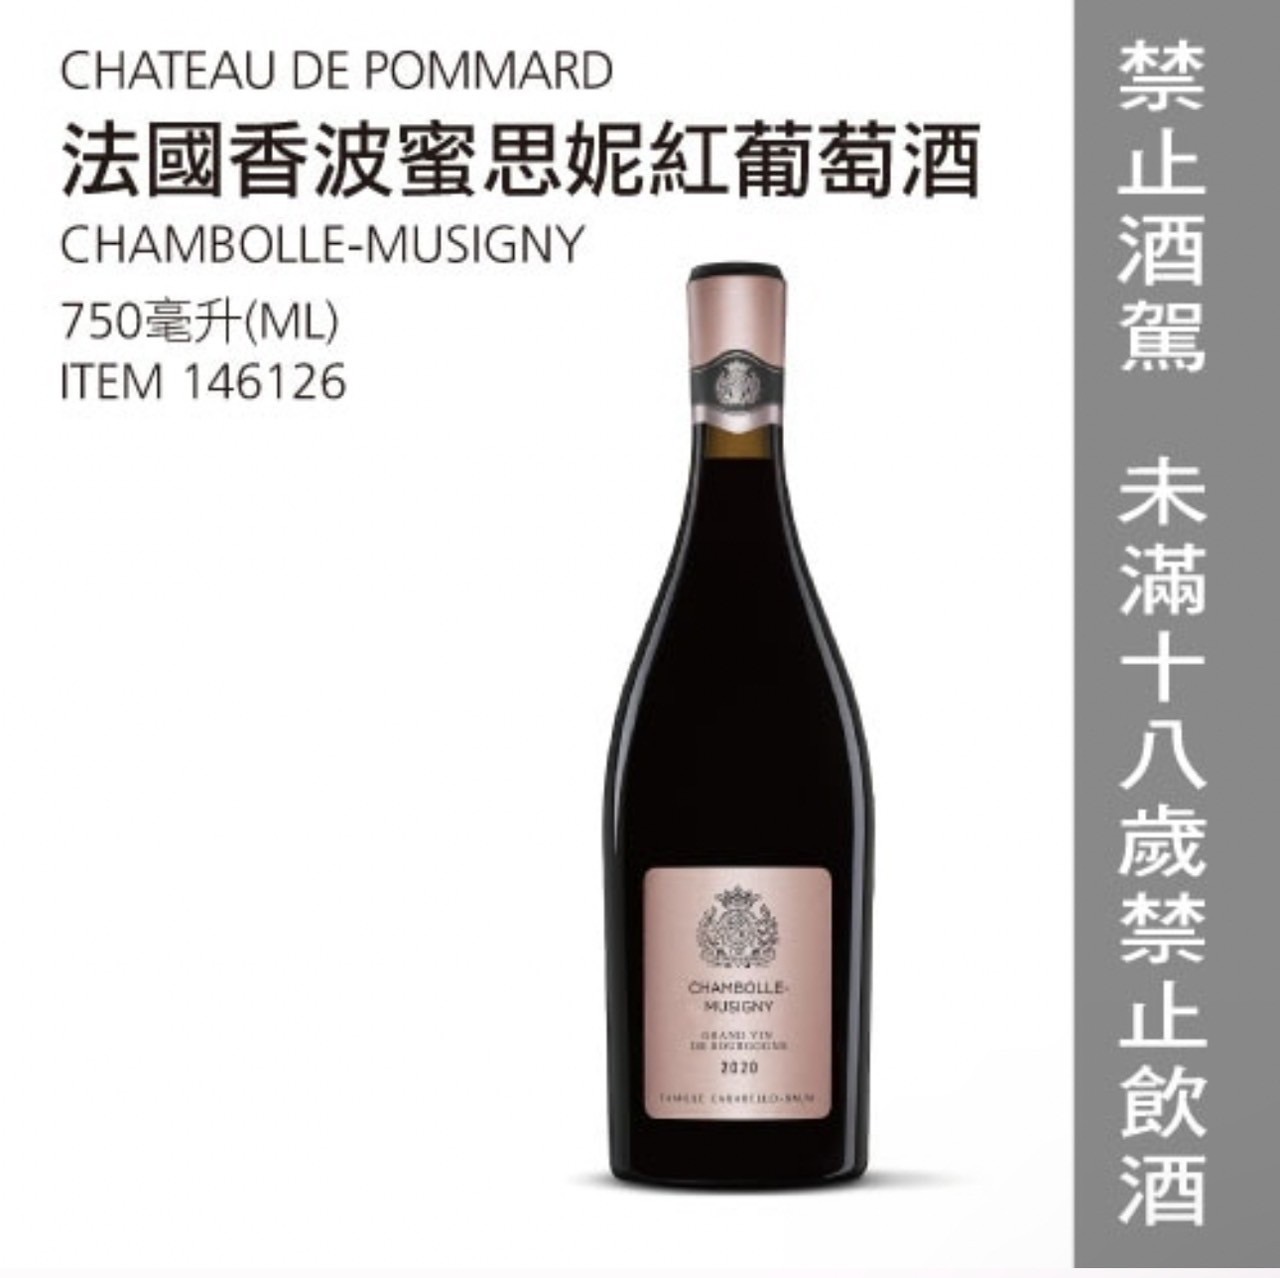 CHATEAU DE POMMARD 法國香波蜜妮紅葡萄酒 2020 #146126